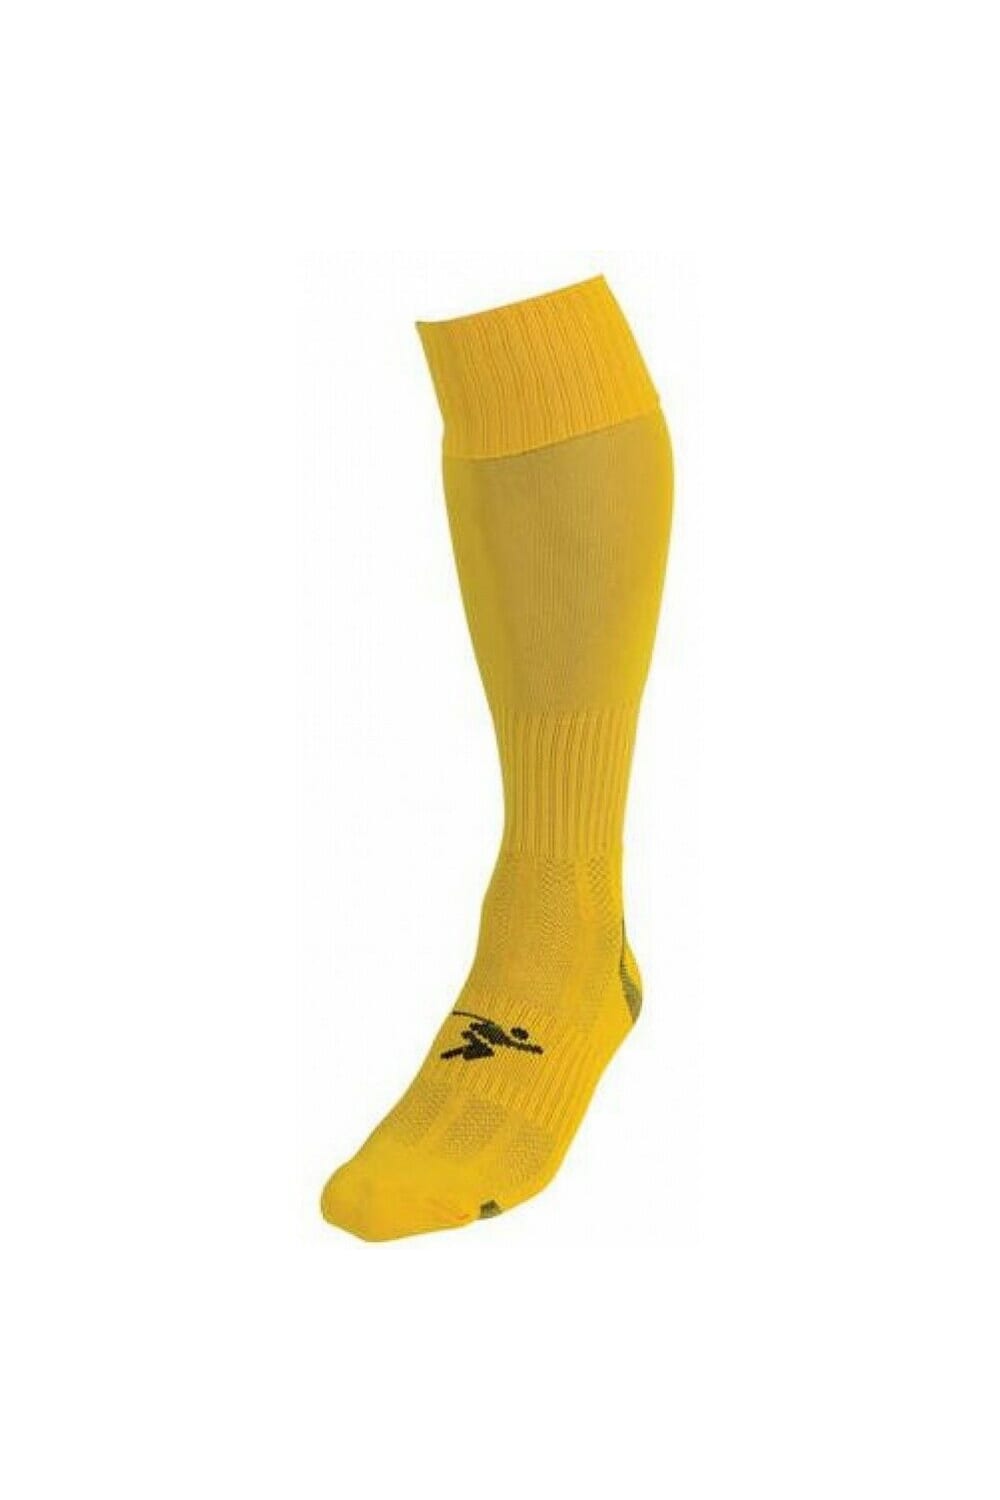 Precision Unisex Adult Pro Plain Football Socks (Yellow)